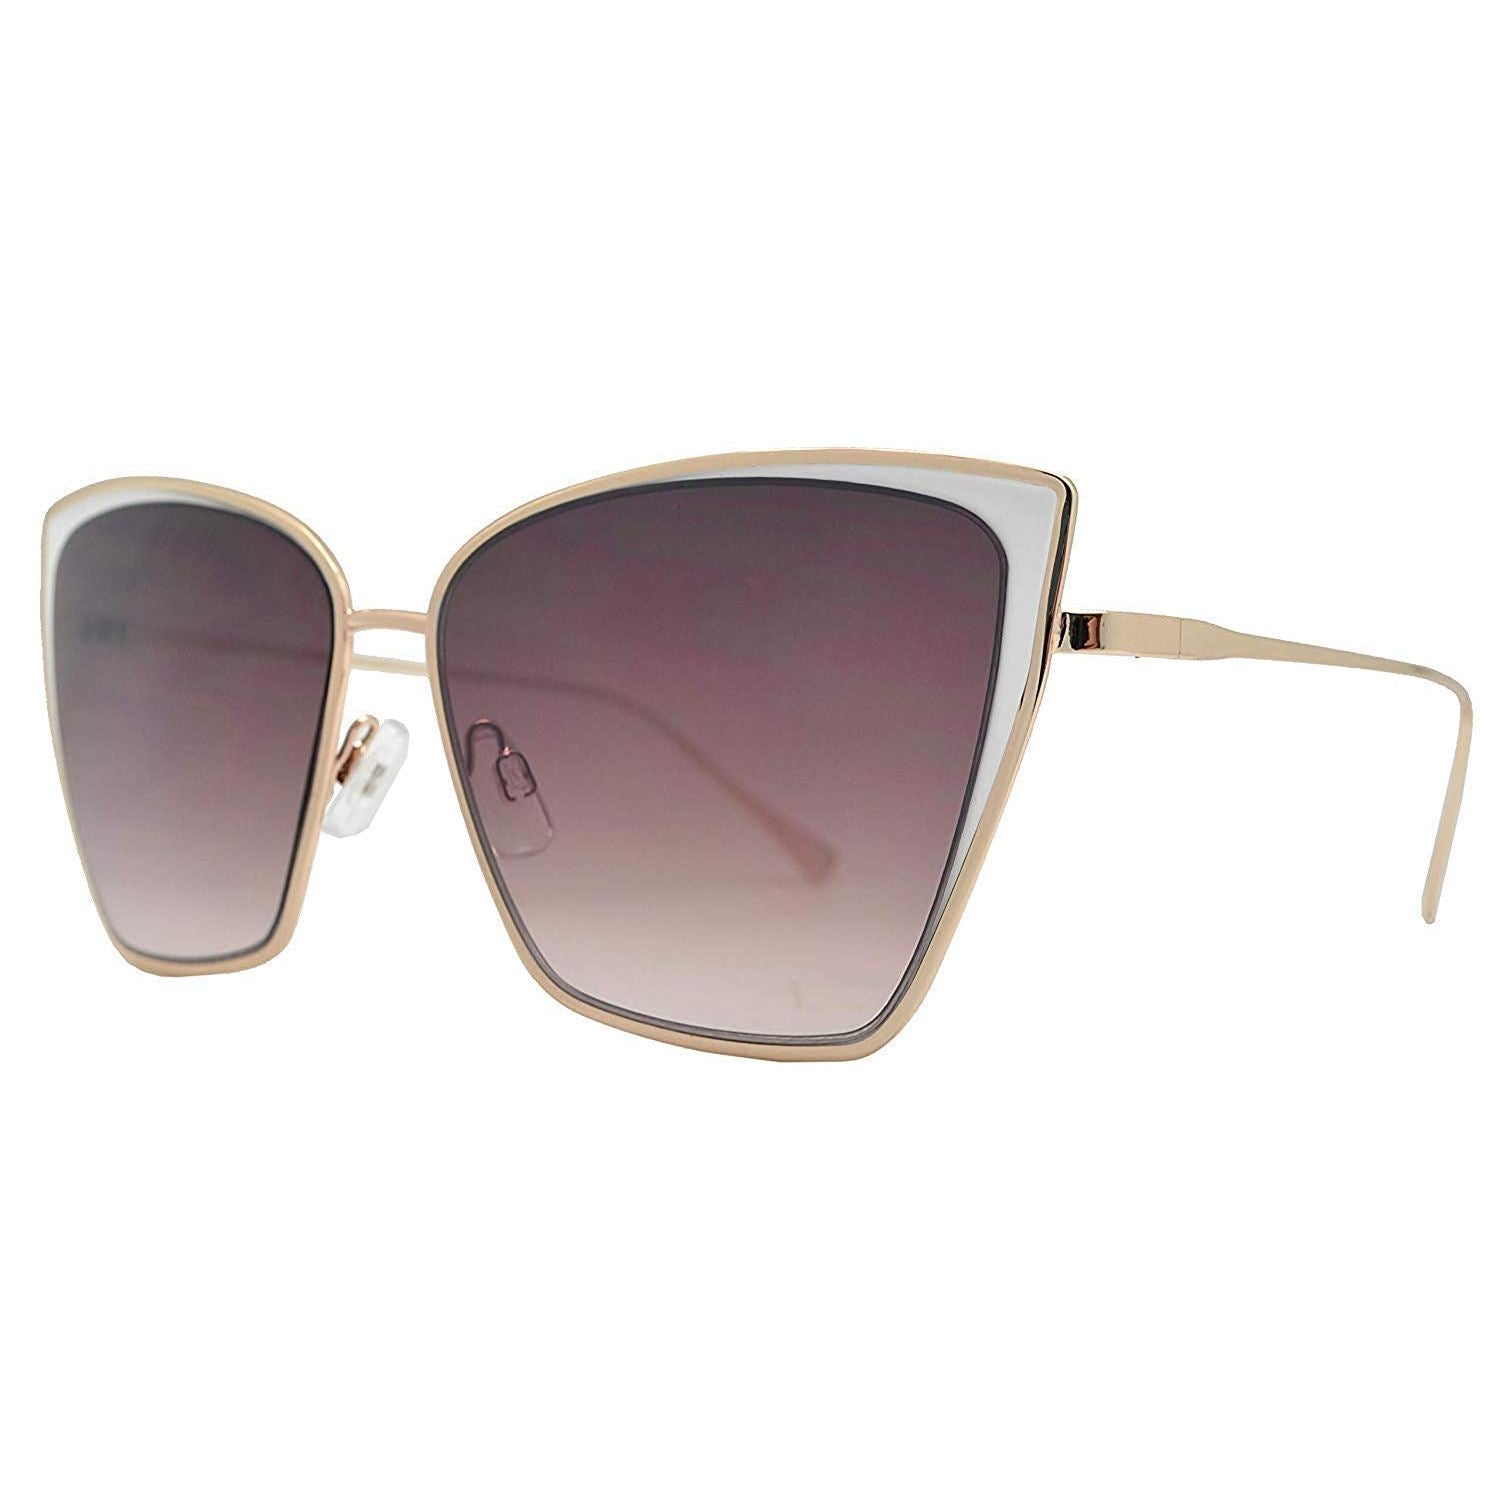 Square Cat Eye Sunglasses - Brown